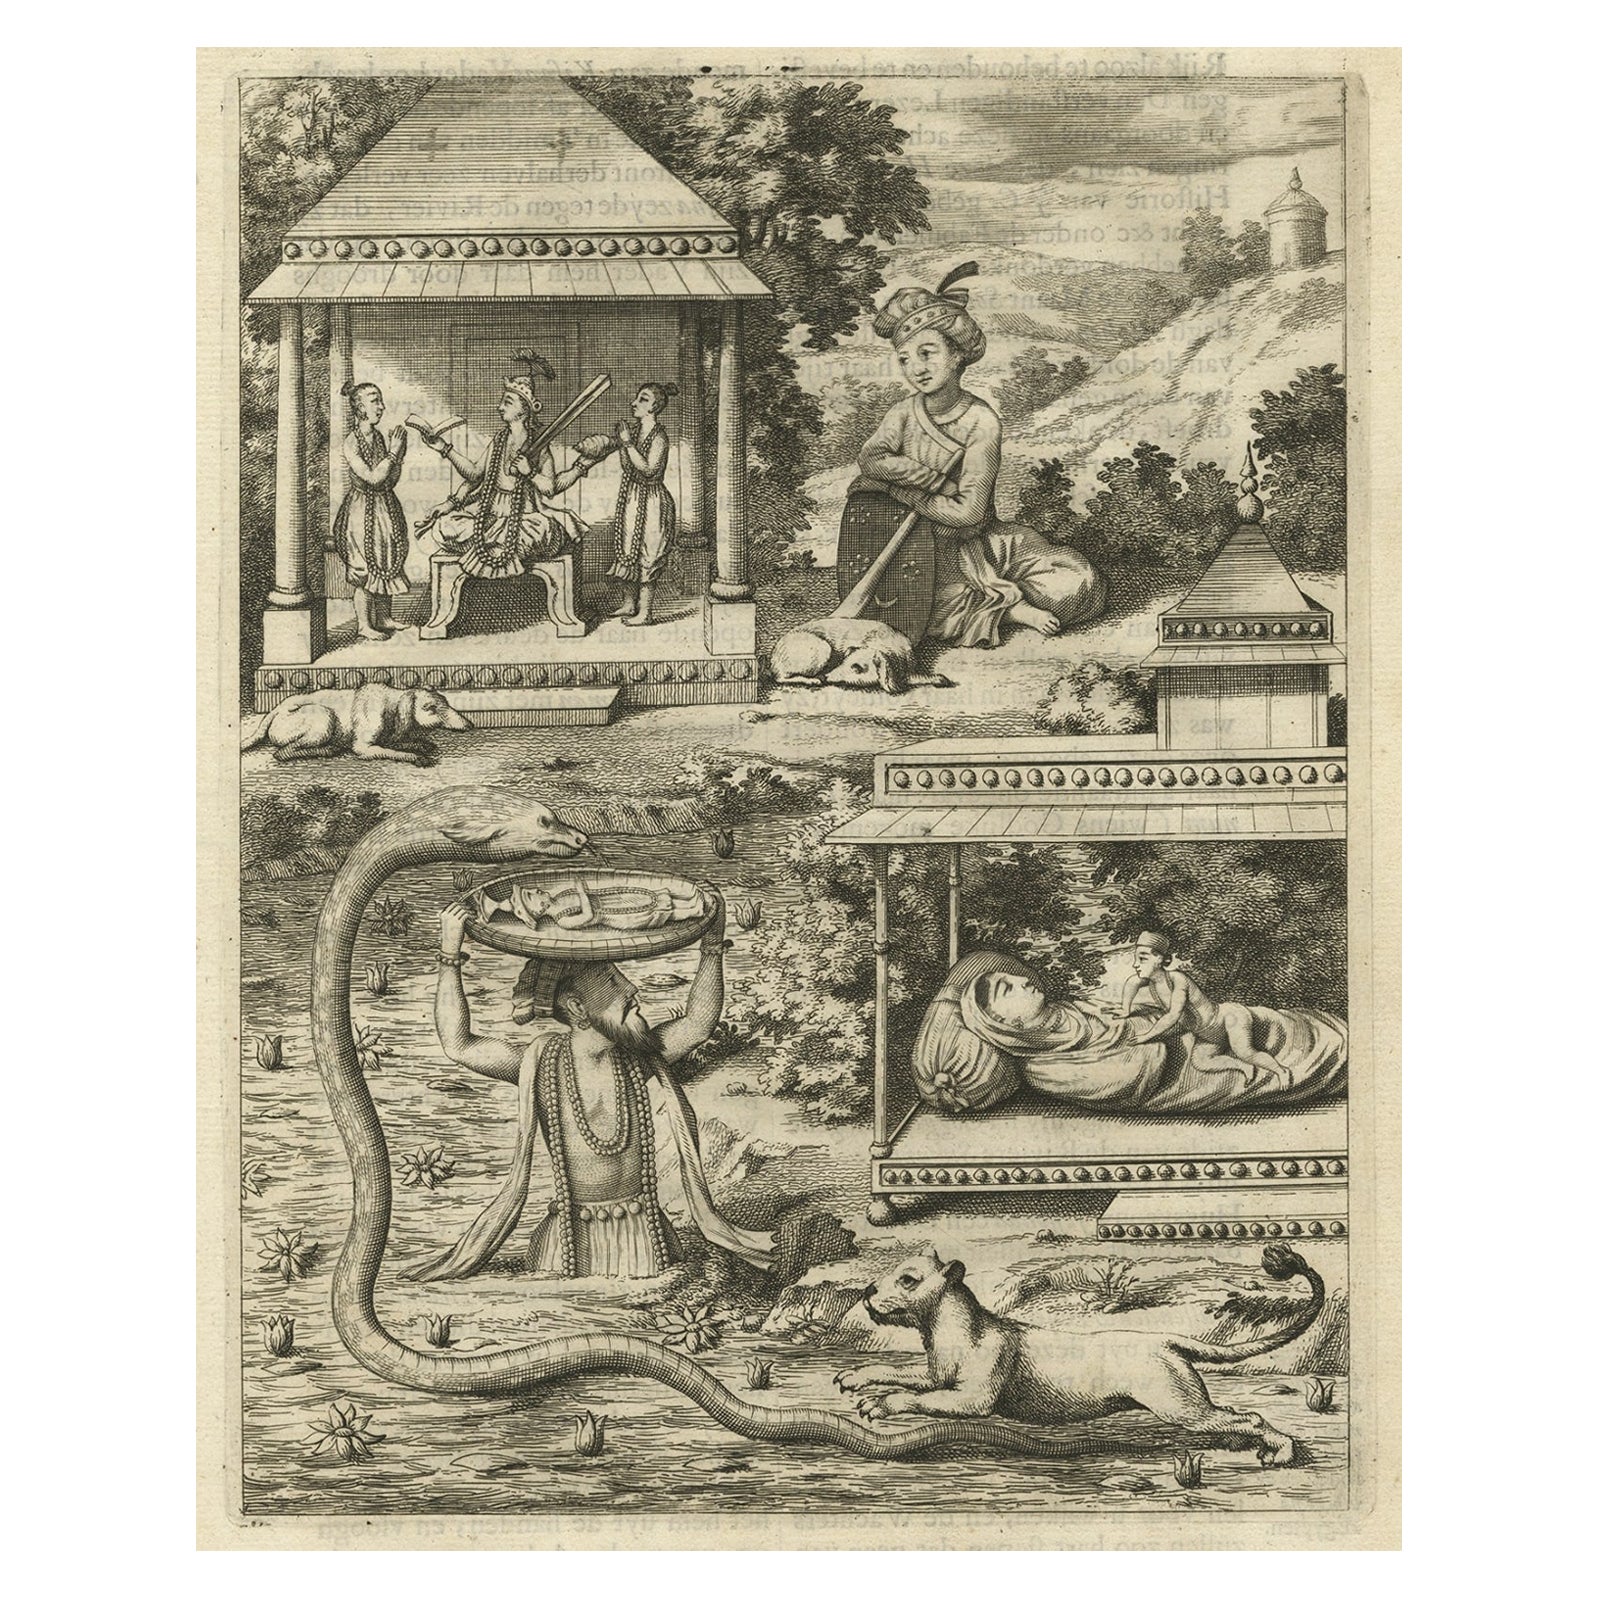 Impression ancienne du dieu hindou Vishnu incarné comme Krishna, 1672